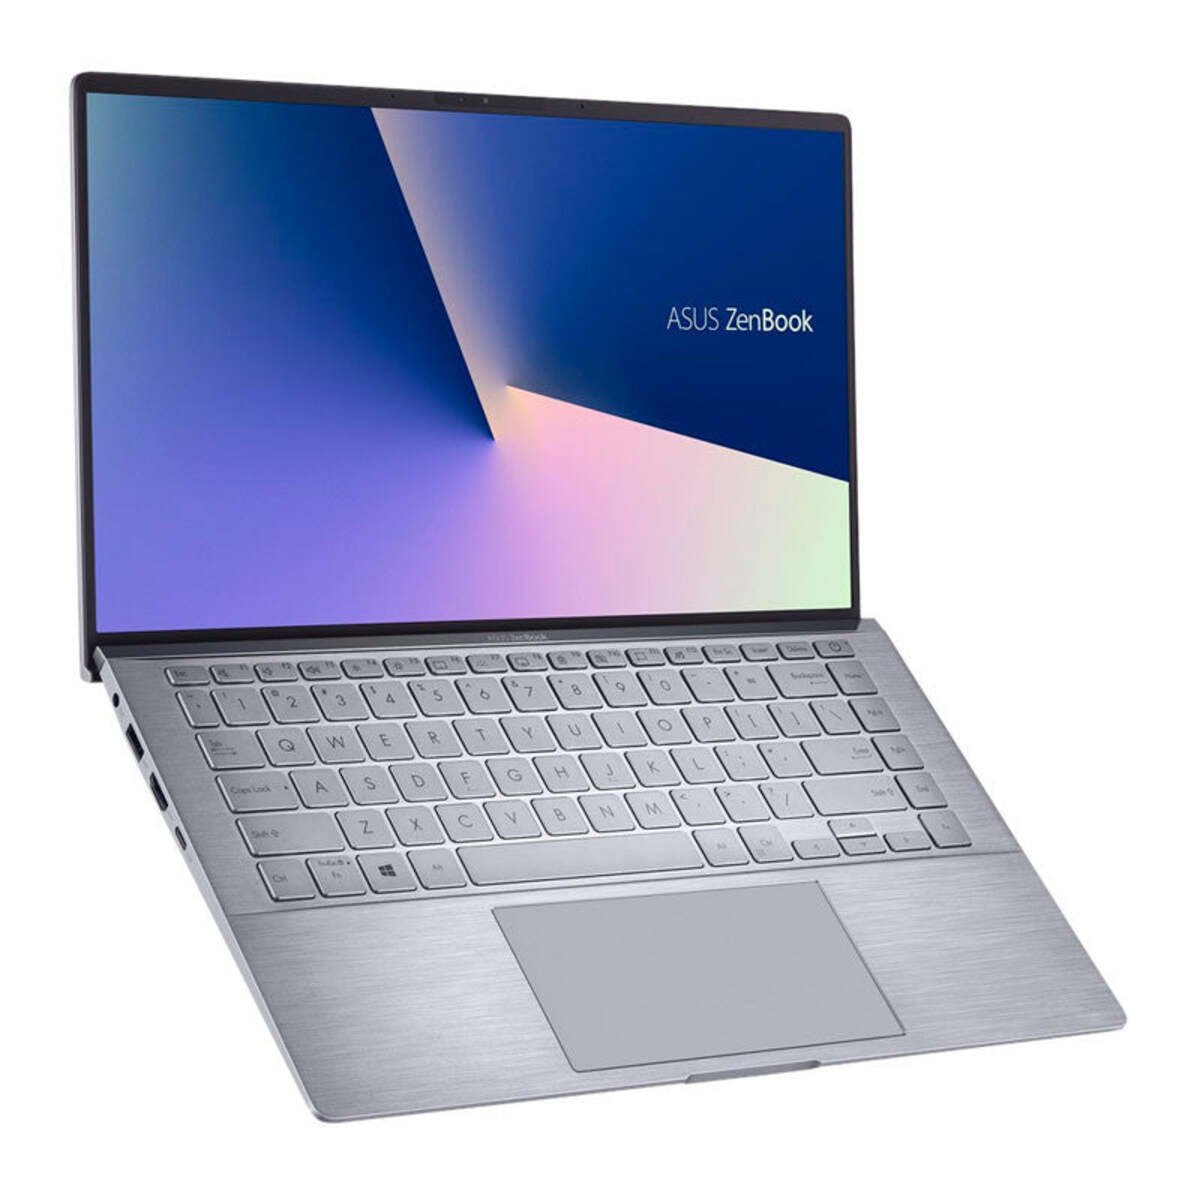 ASUS Zenbook 14 Inches Laptop - AMD Ryzen 5 4500U, 8GB RAM, 256GB SSD, NVIDIA GeForce MX350, Windows 10 - Light Gray